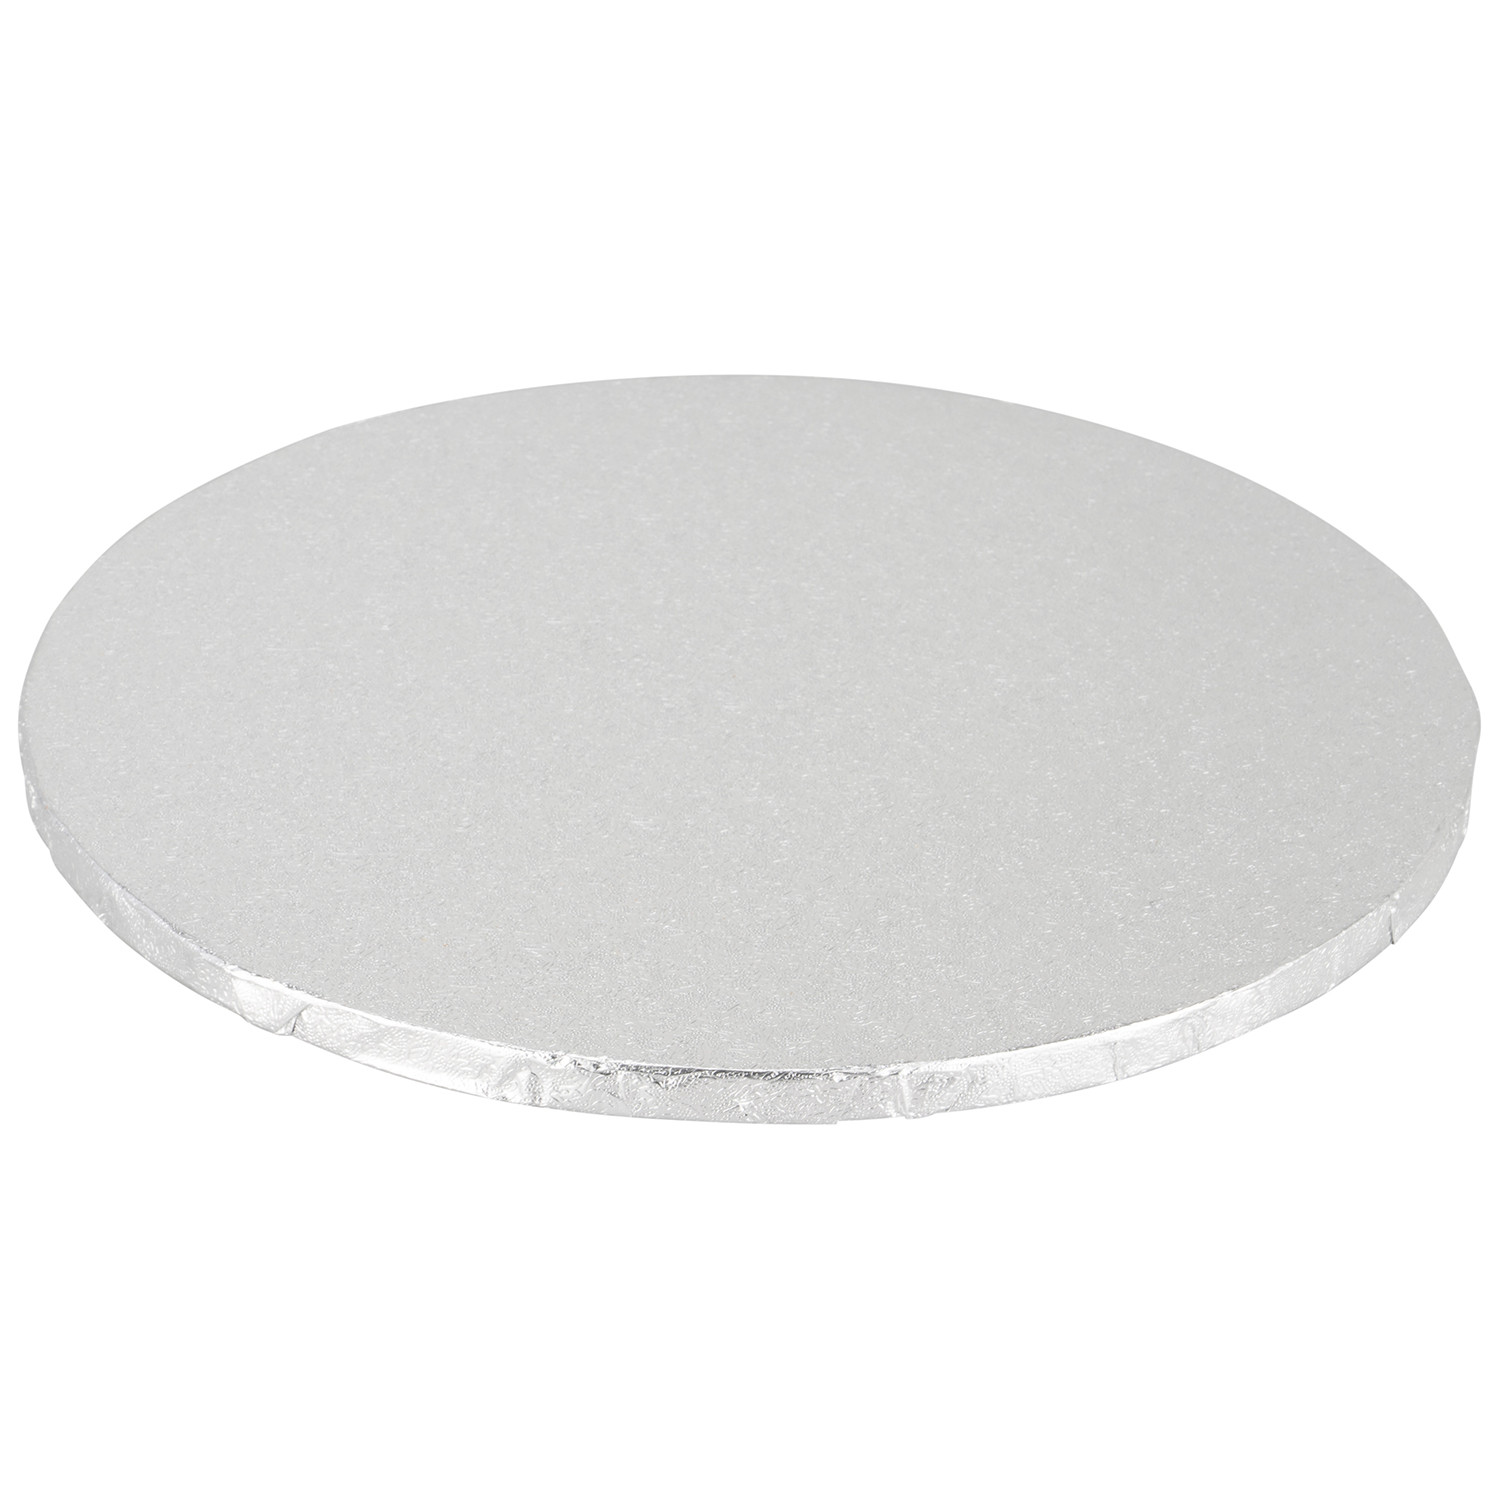 12 Round Drum Cake Board - Silver Image 2